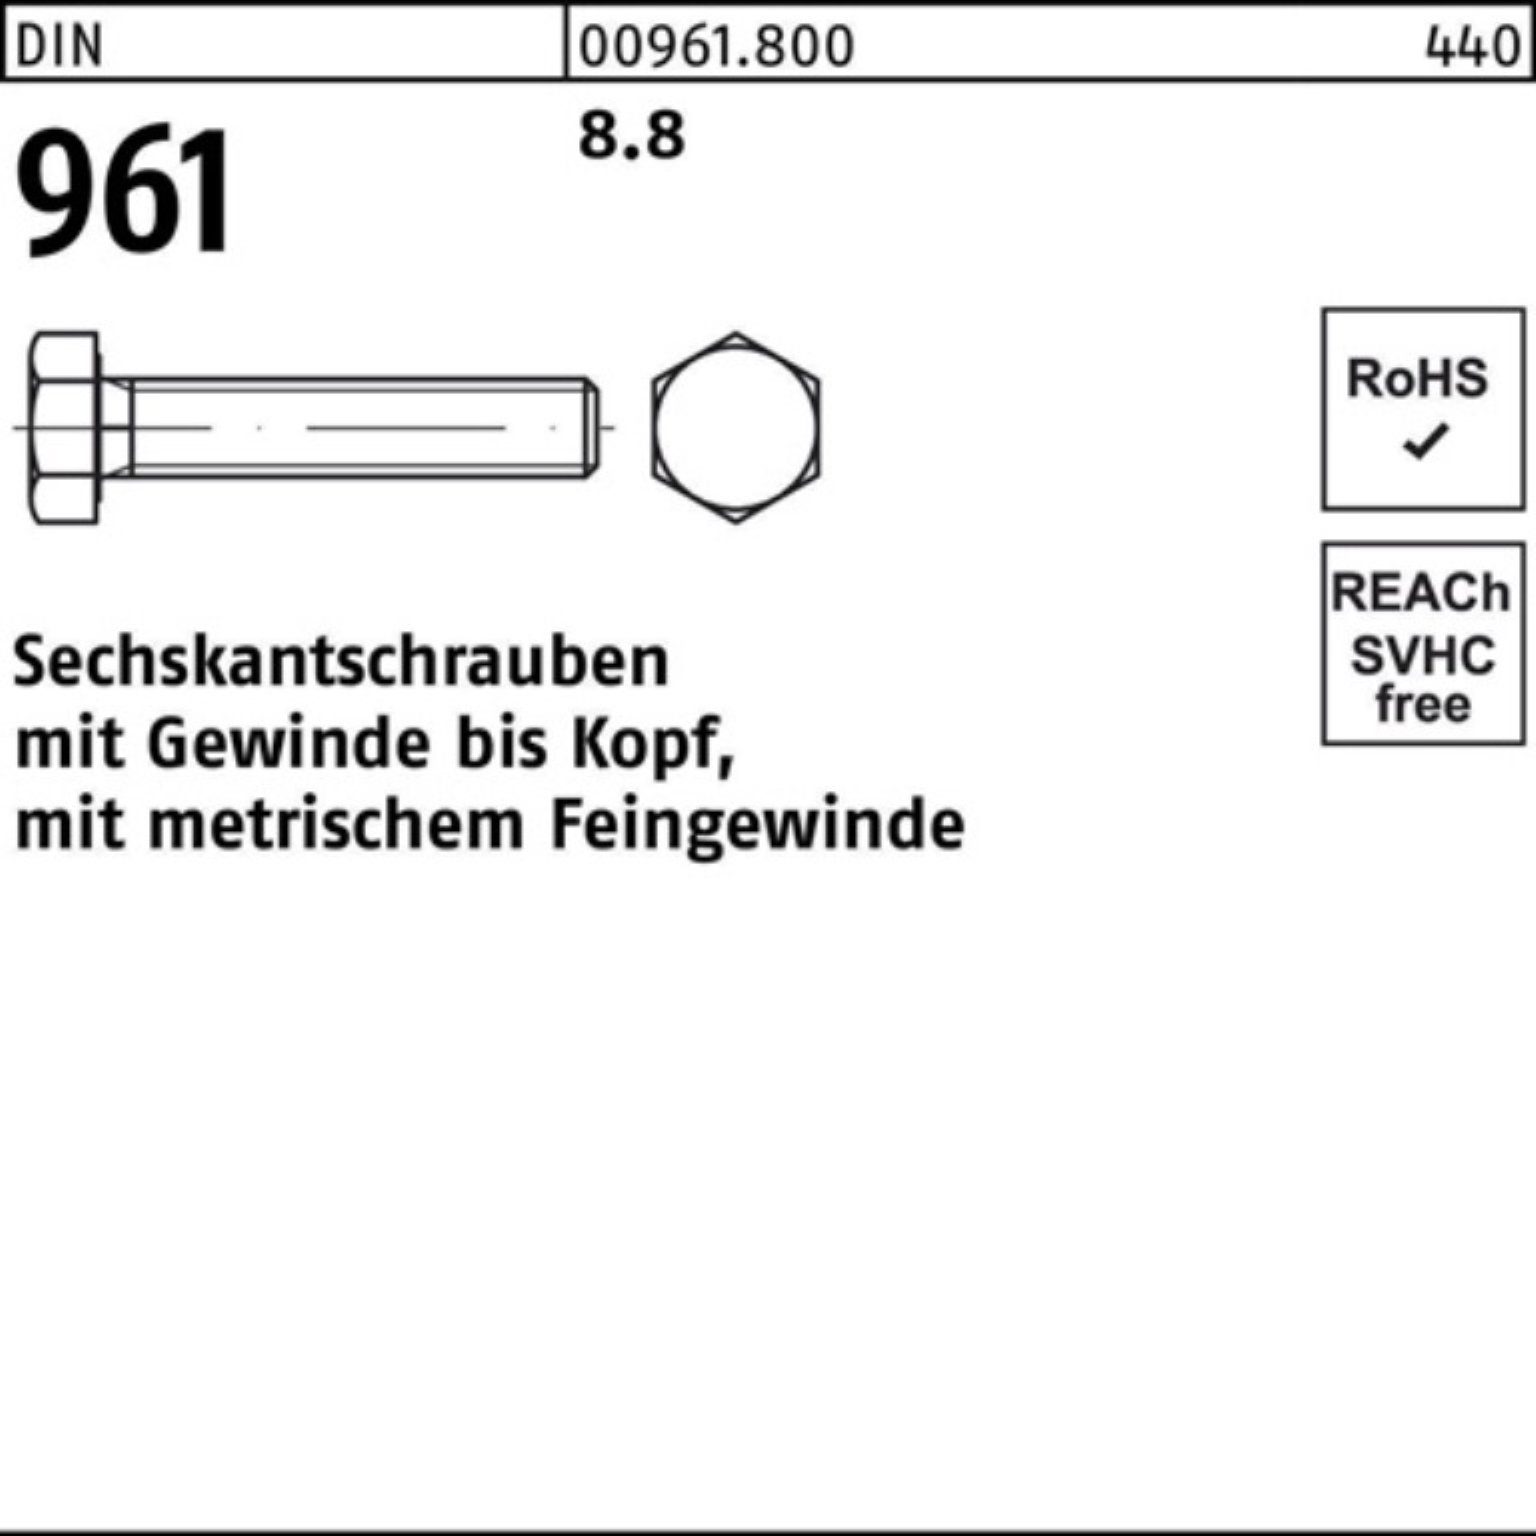 Reyher Sechskantschraube 100er VG Pack DIN 45 8.8 DI M10x1,25x 961 Stück 100 Sechskantschraube